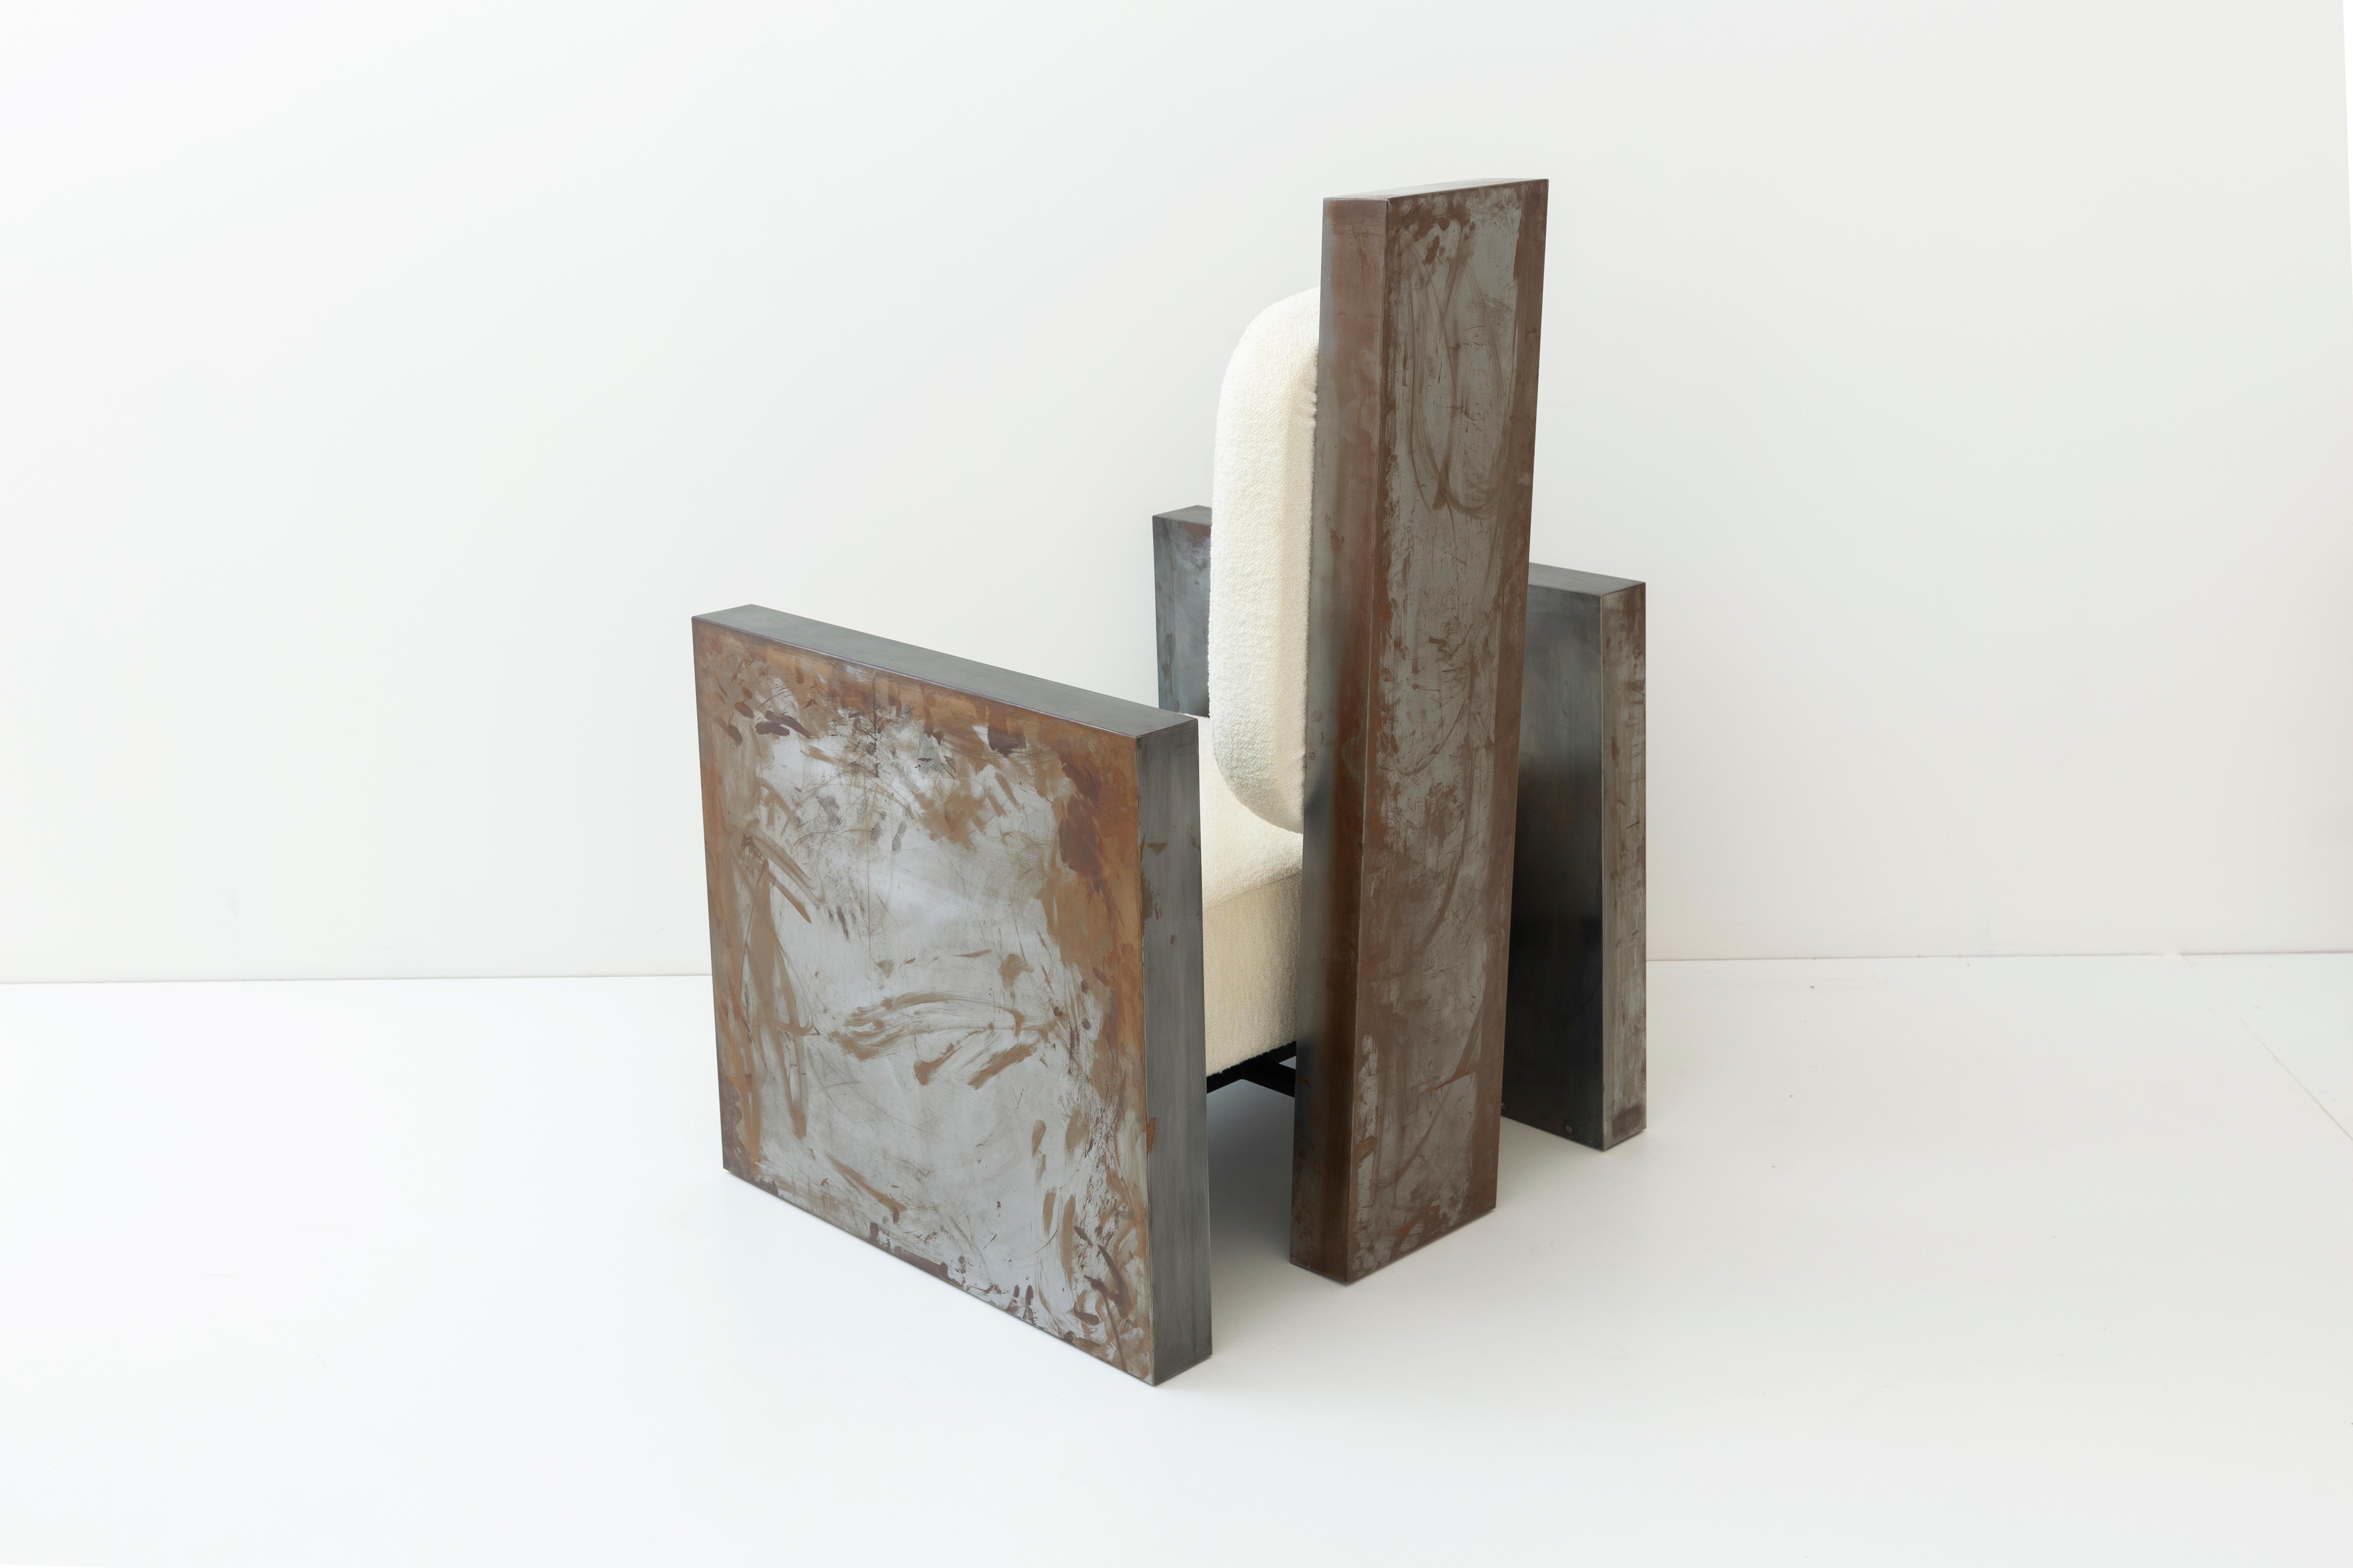 Sculptural patinated metal armchair by Rooms
Dimensions: L 82 x W 73 x H 116 cm
Materials: L 82 x W 73 x H 116

